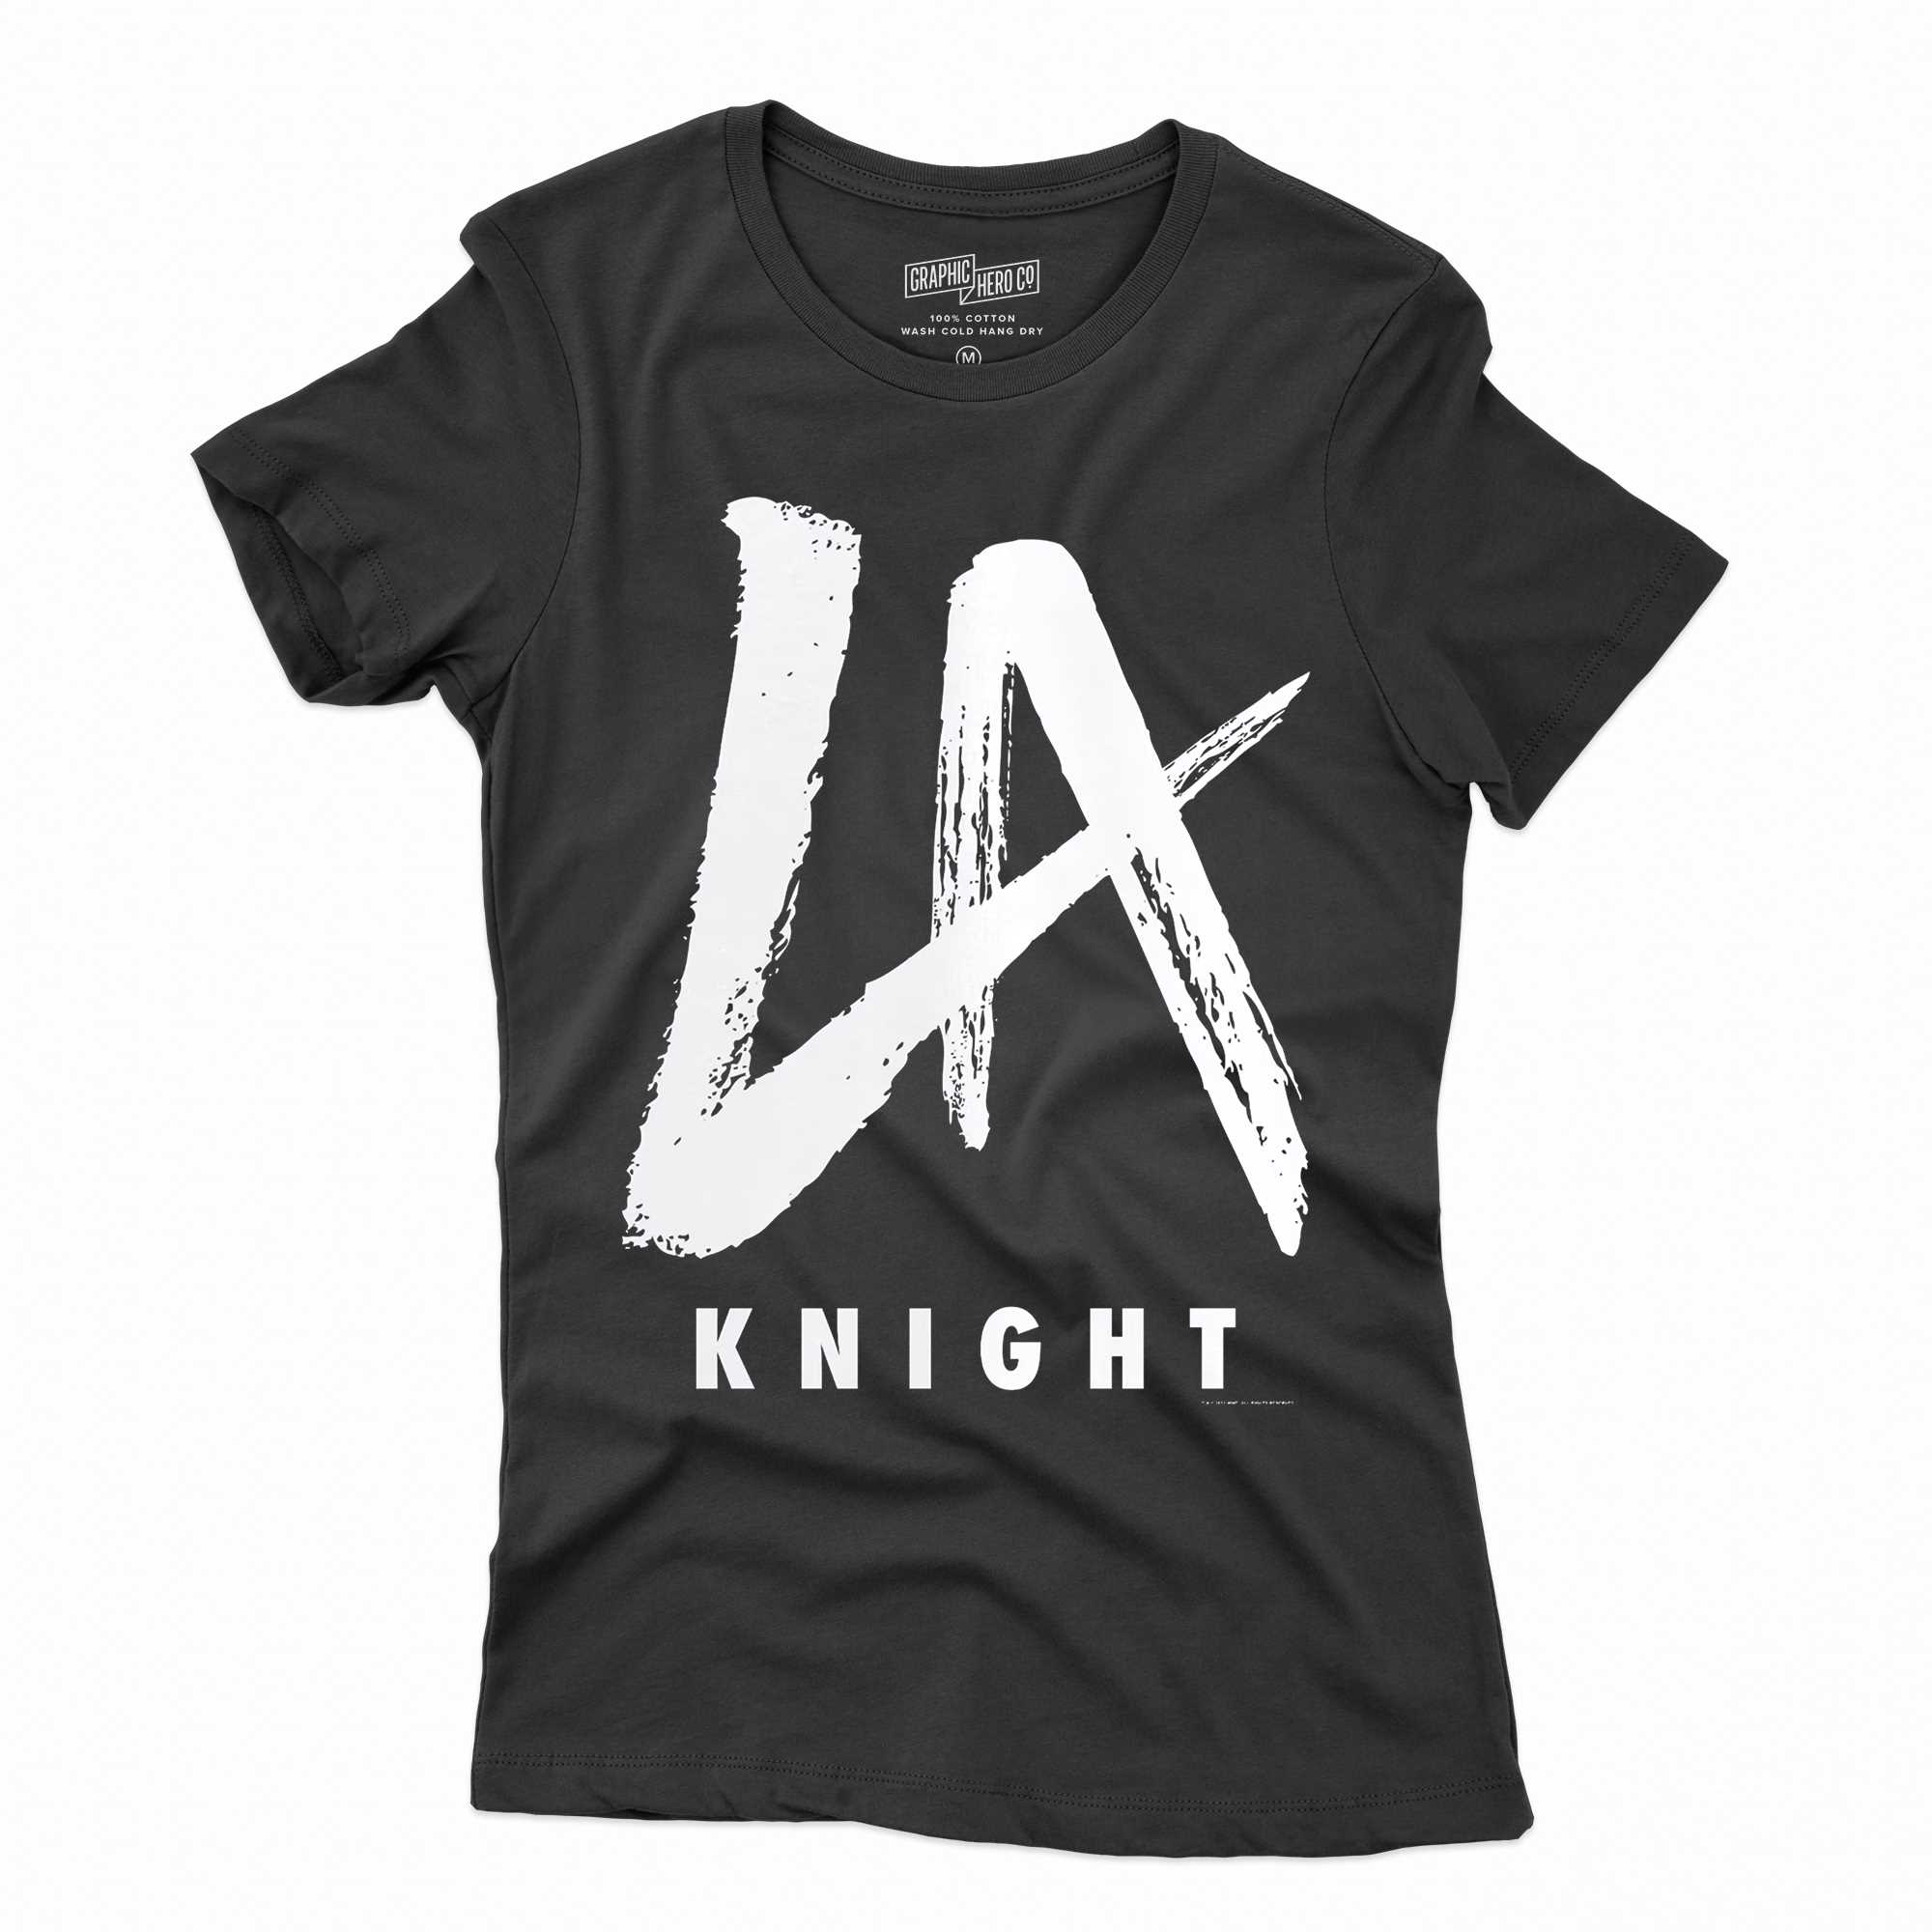 La Knight Fanatics Branded Logo Shirt - Reallgraphics